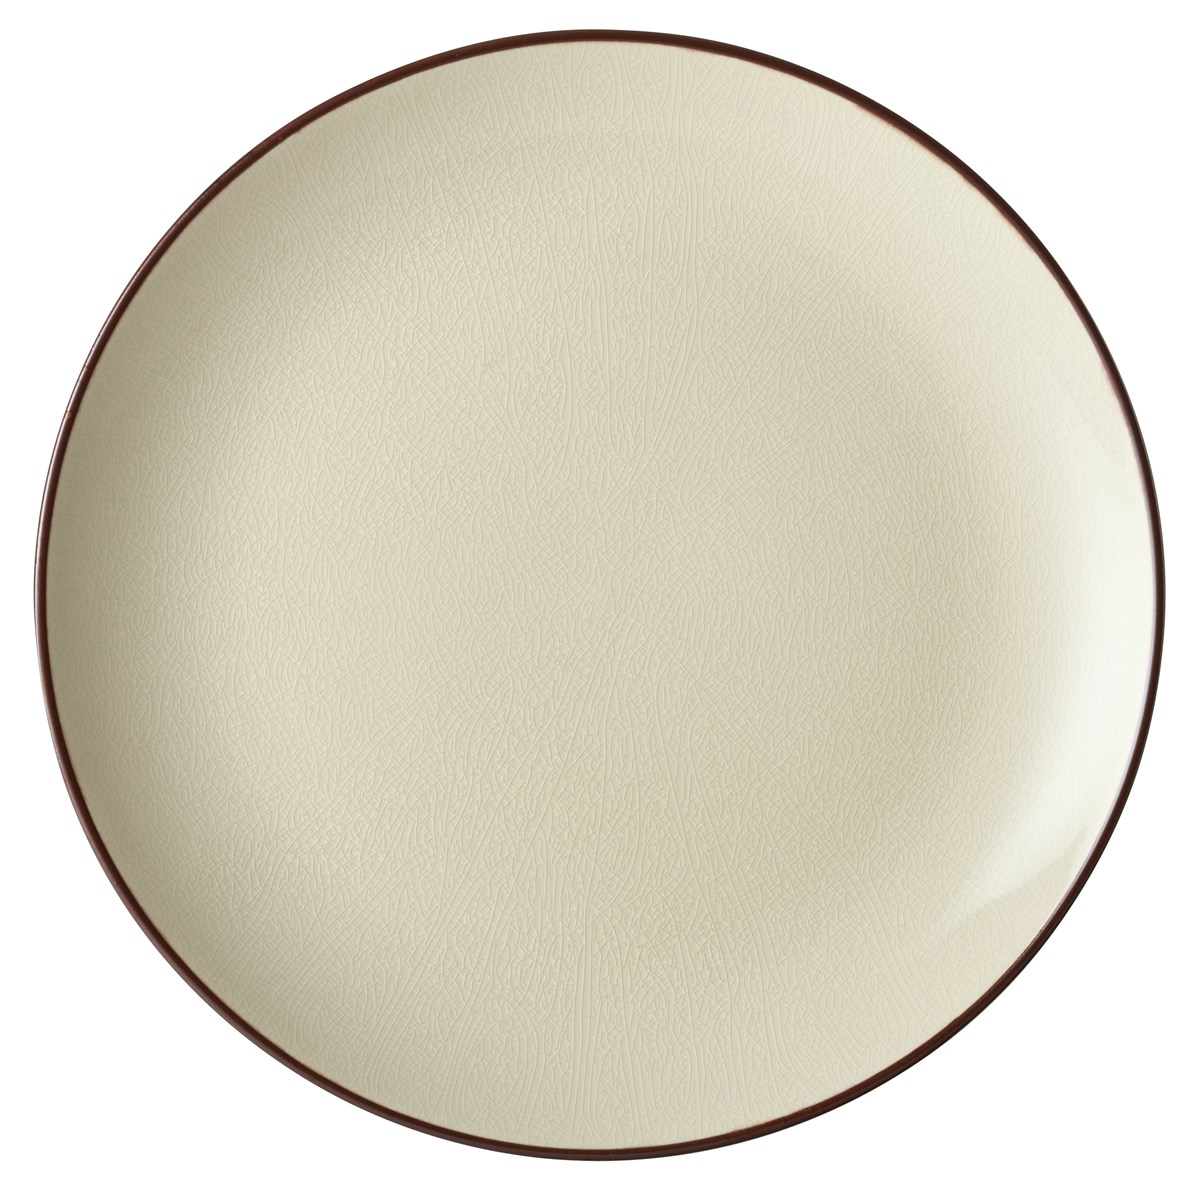 Round plate. Сити беж тарелка 20см 10327slbd37. Тарелка обеденная керамика 25 см ПДЛ. Тарелка сверху. Тарелки однотонные керамические.